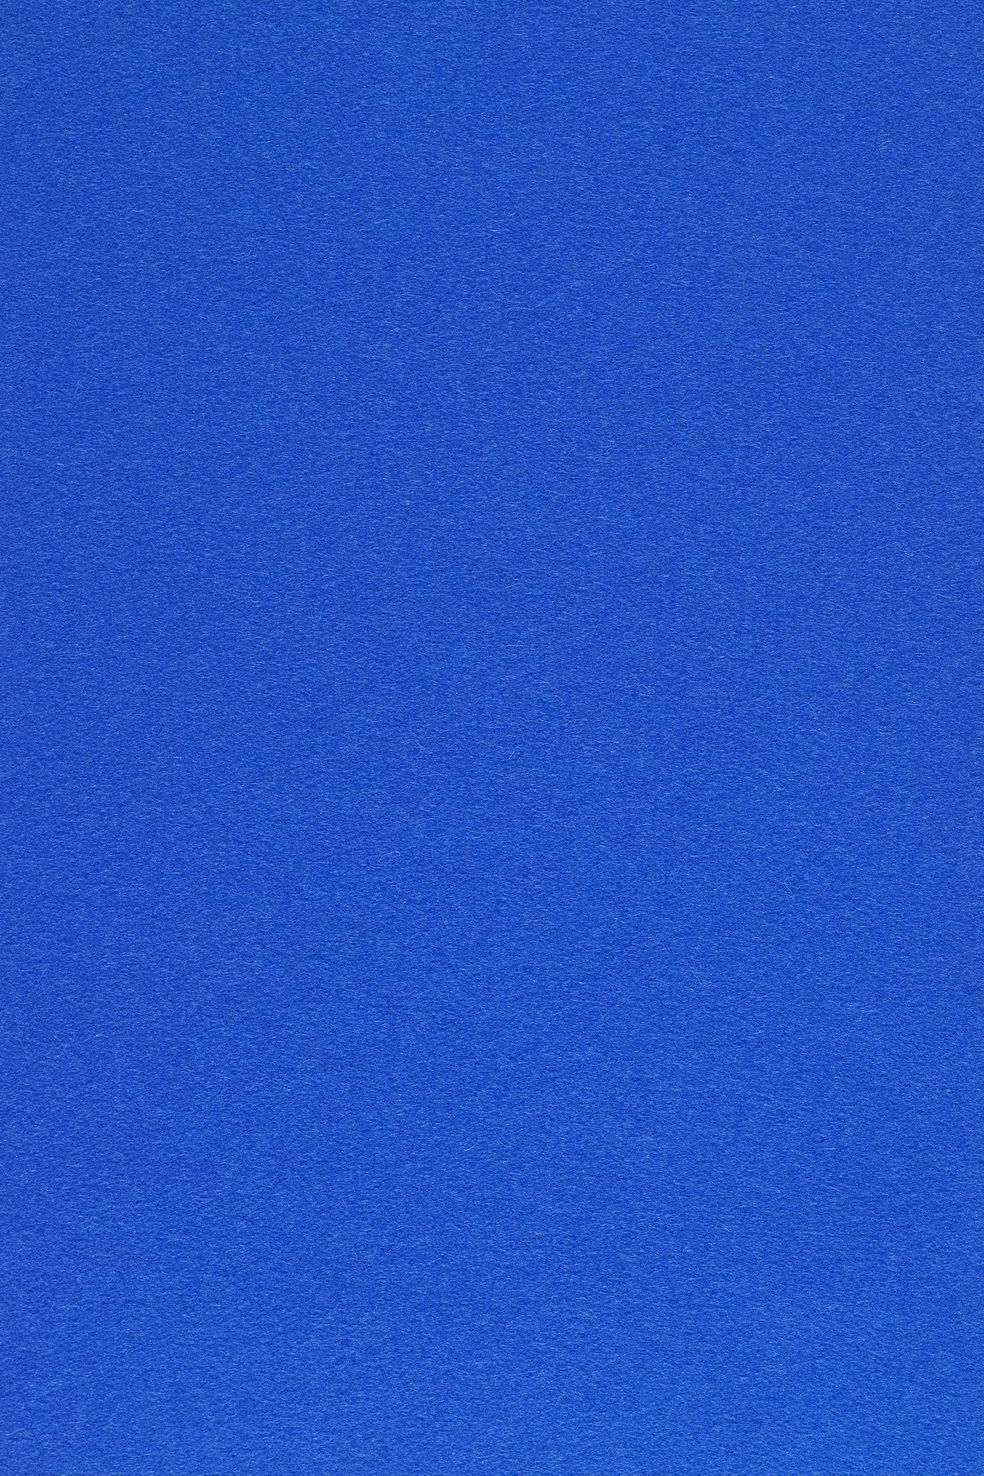 Fabric sample Divina 3 756 blue